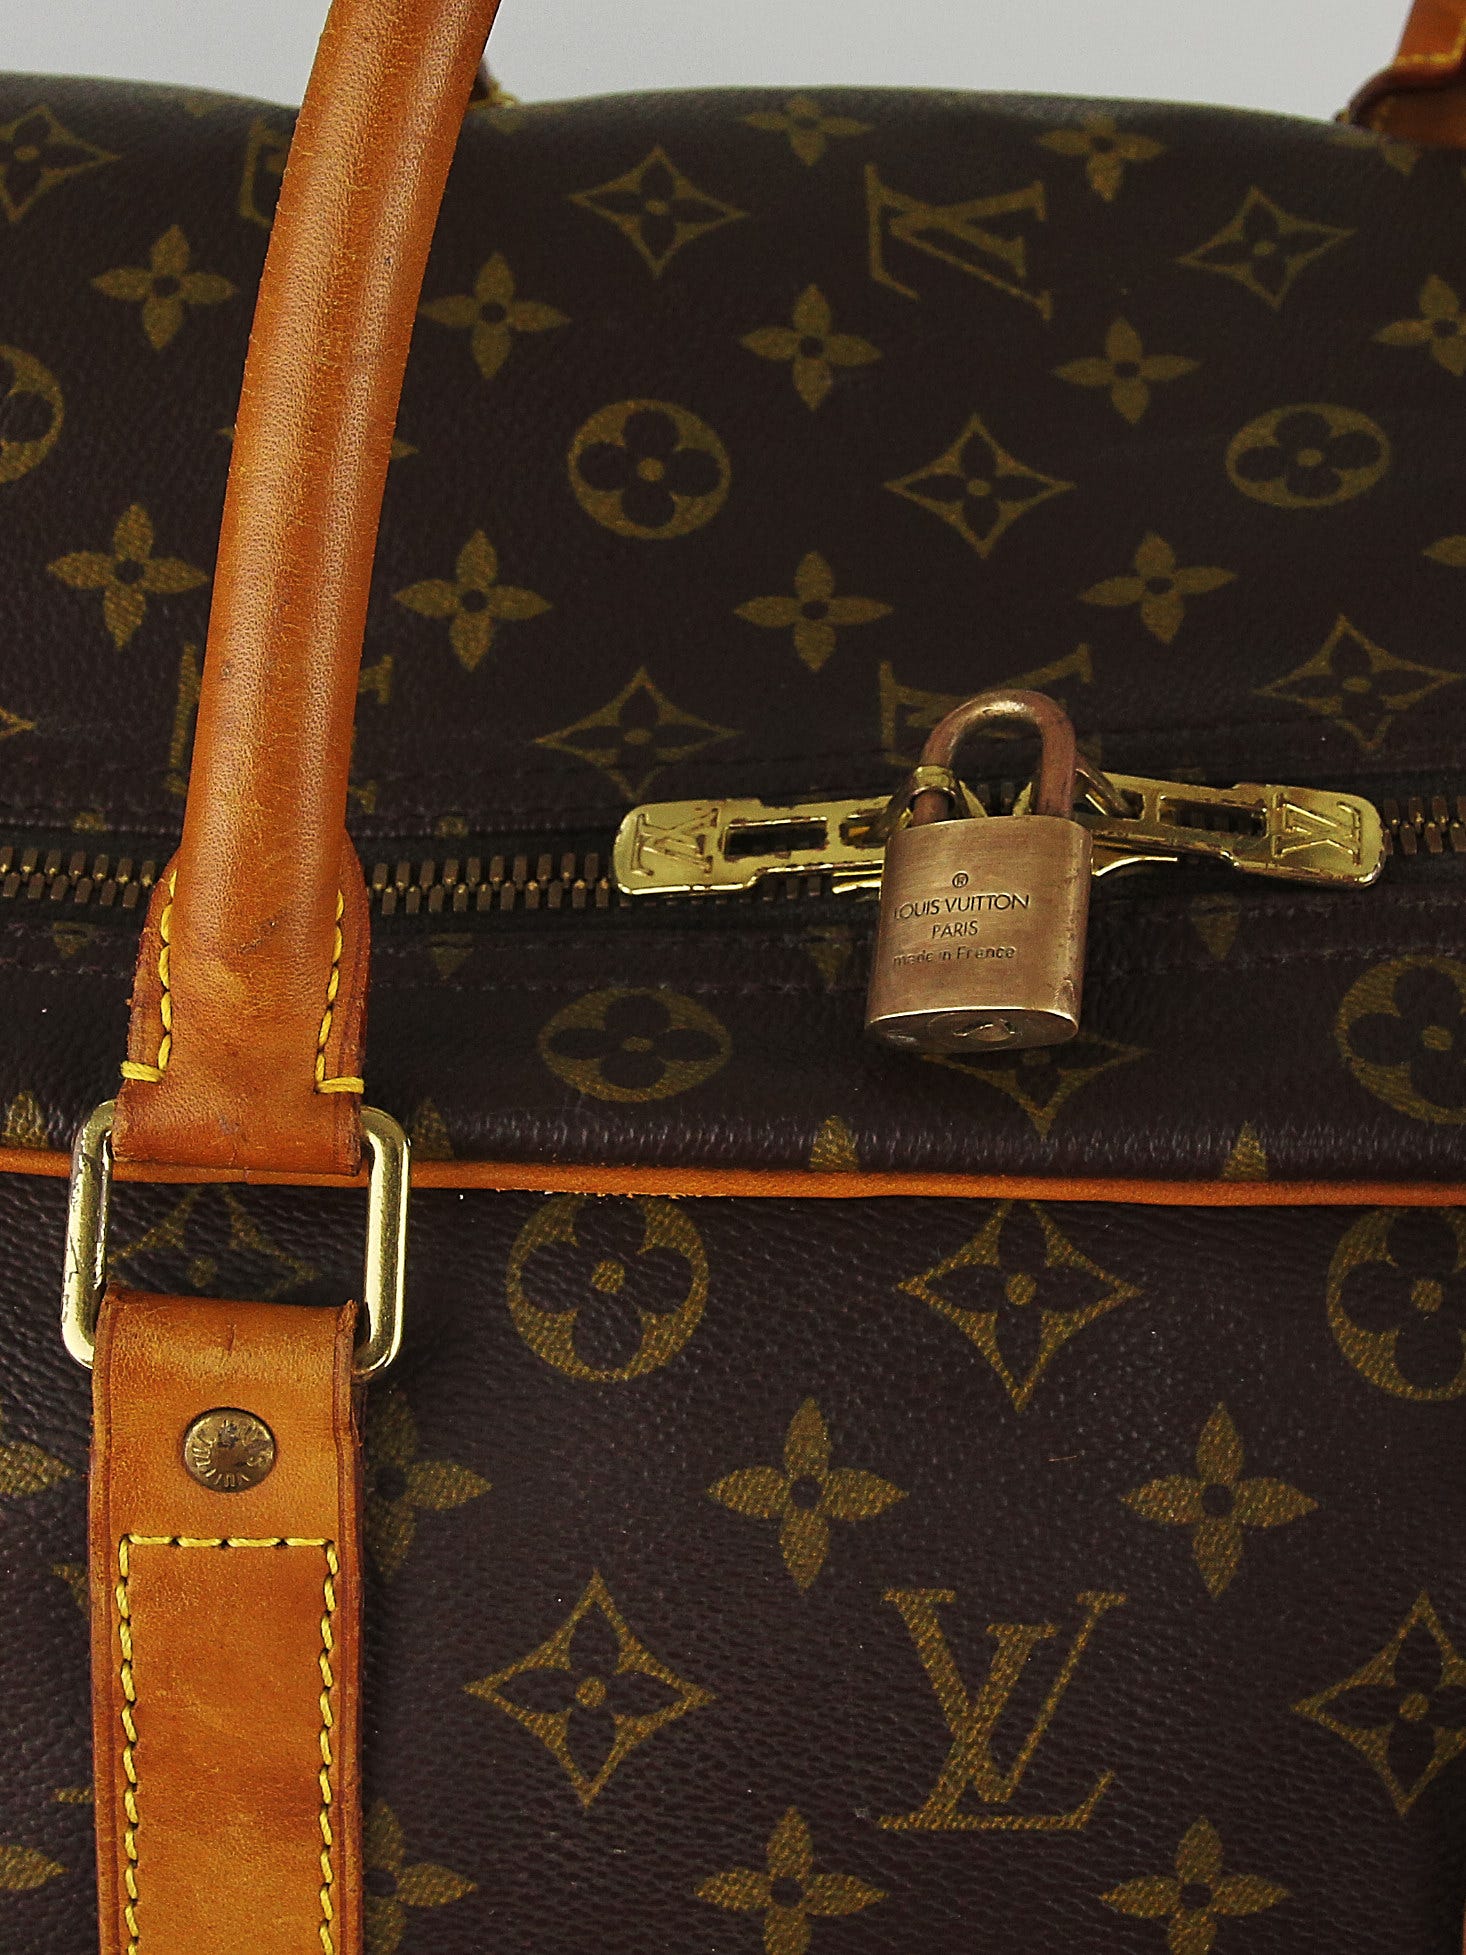 Louis Vuitton Monogram Sirius 70 Soft Suitcase Luggage 87lk513s